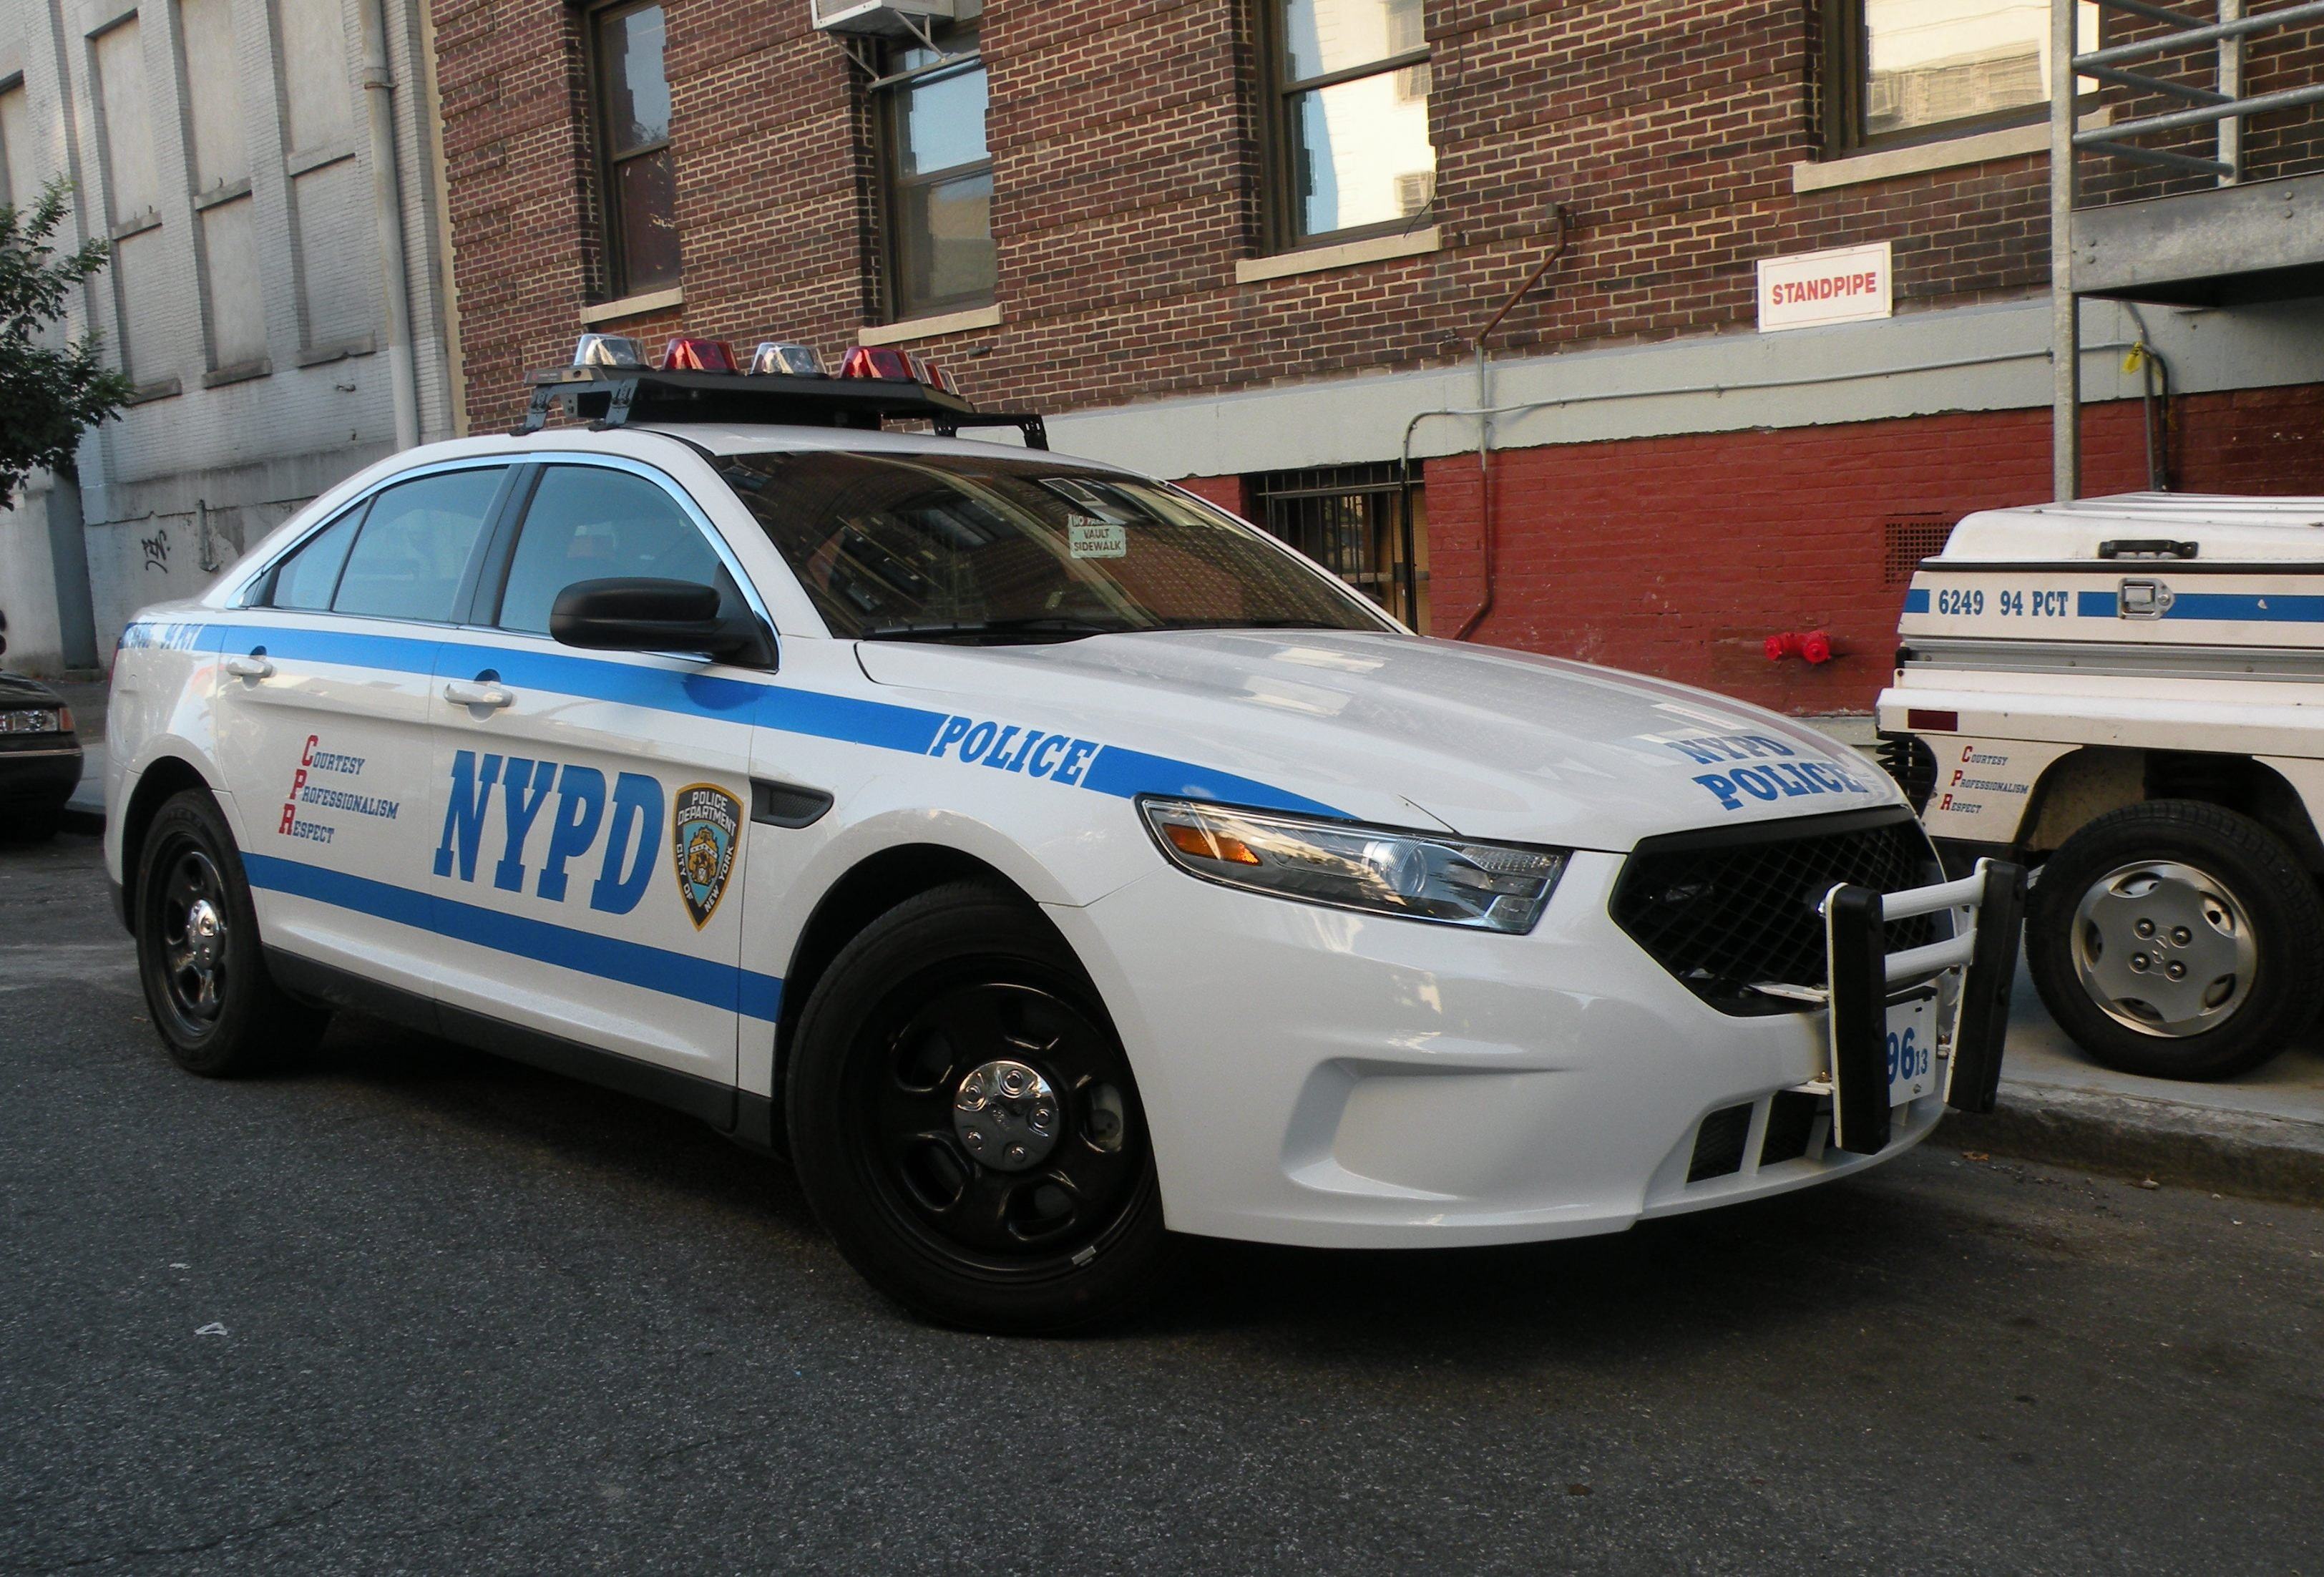 Нужны полицейские машины. Ford Taurus 2013 Police Interceptor. Ford Police Interceptor 2013. Ford Taurus Police Interceptor. Машина NYPD Police.